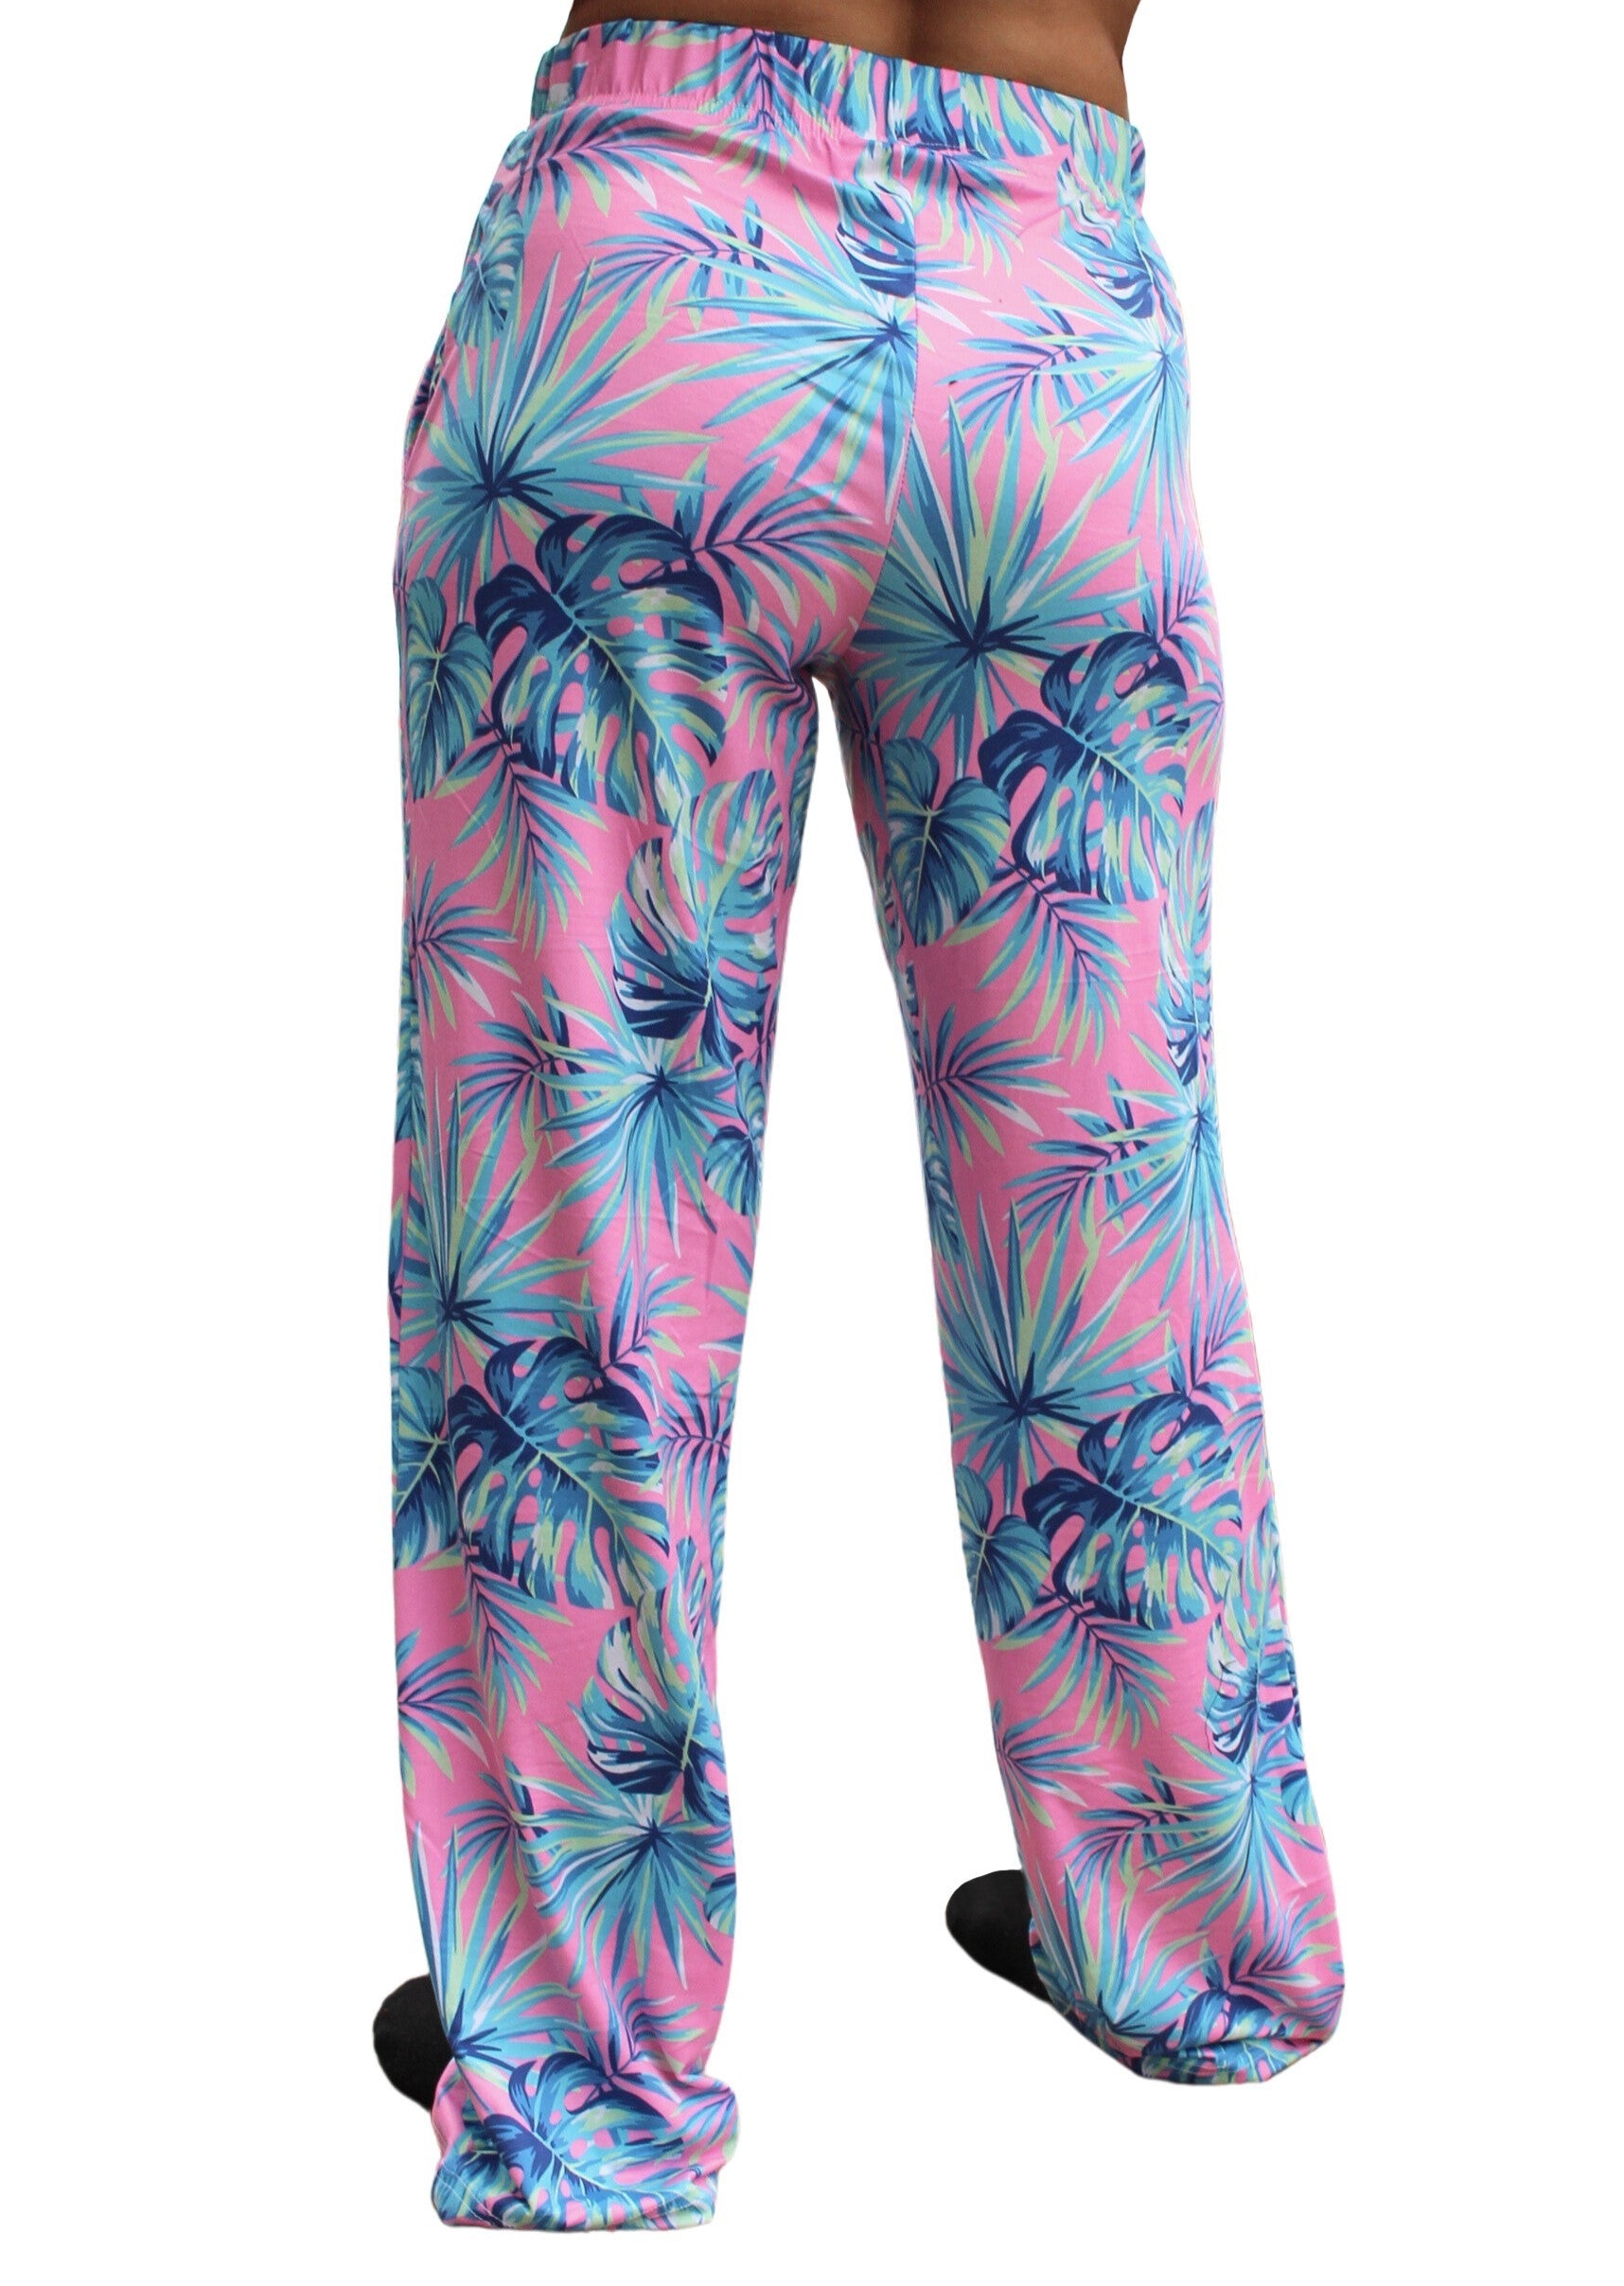 Tropical Leaf Pajama Lounge Pants back view on model (waist down)